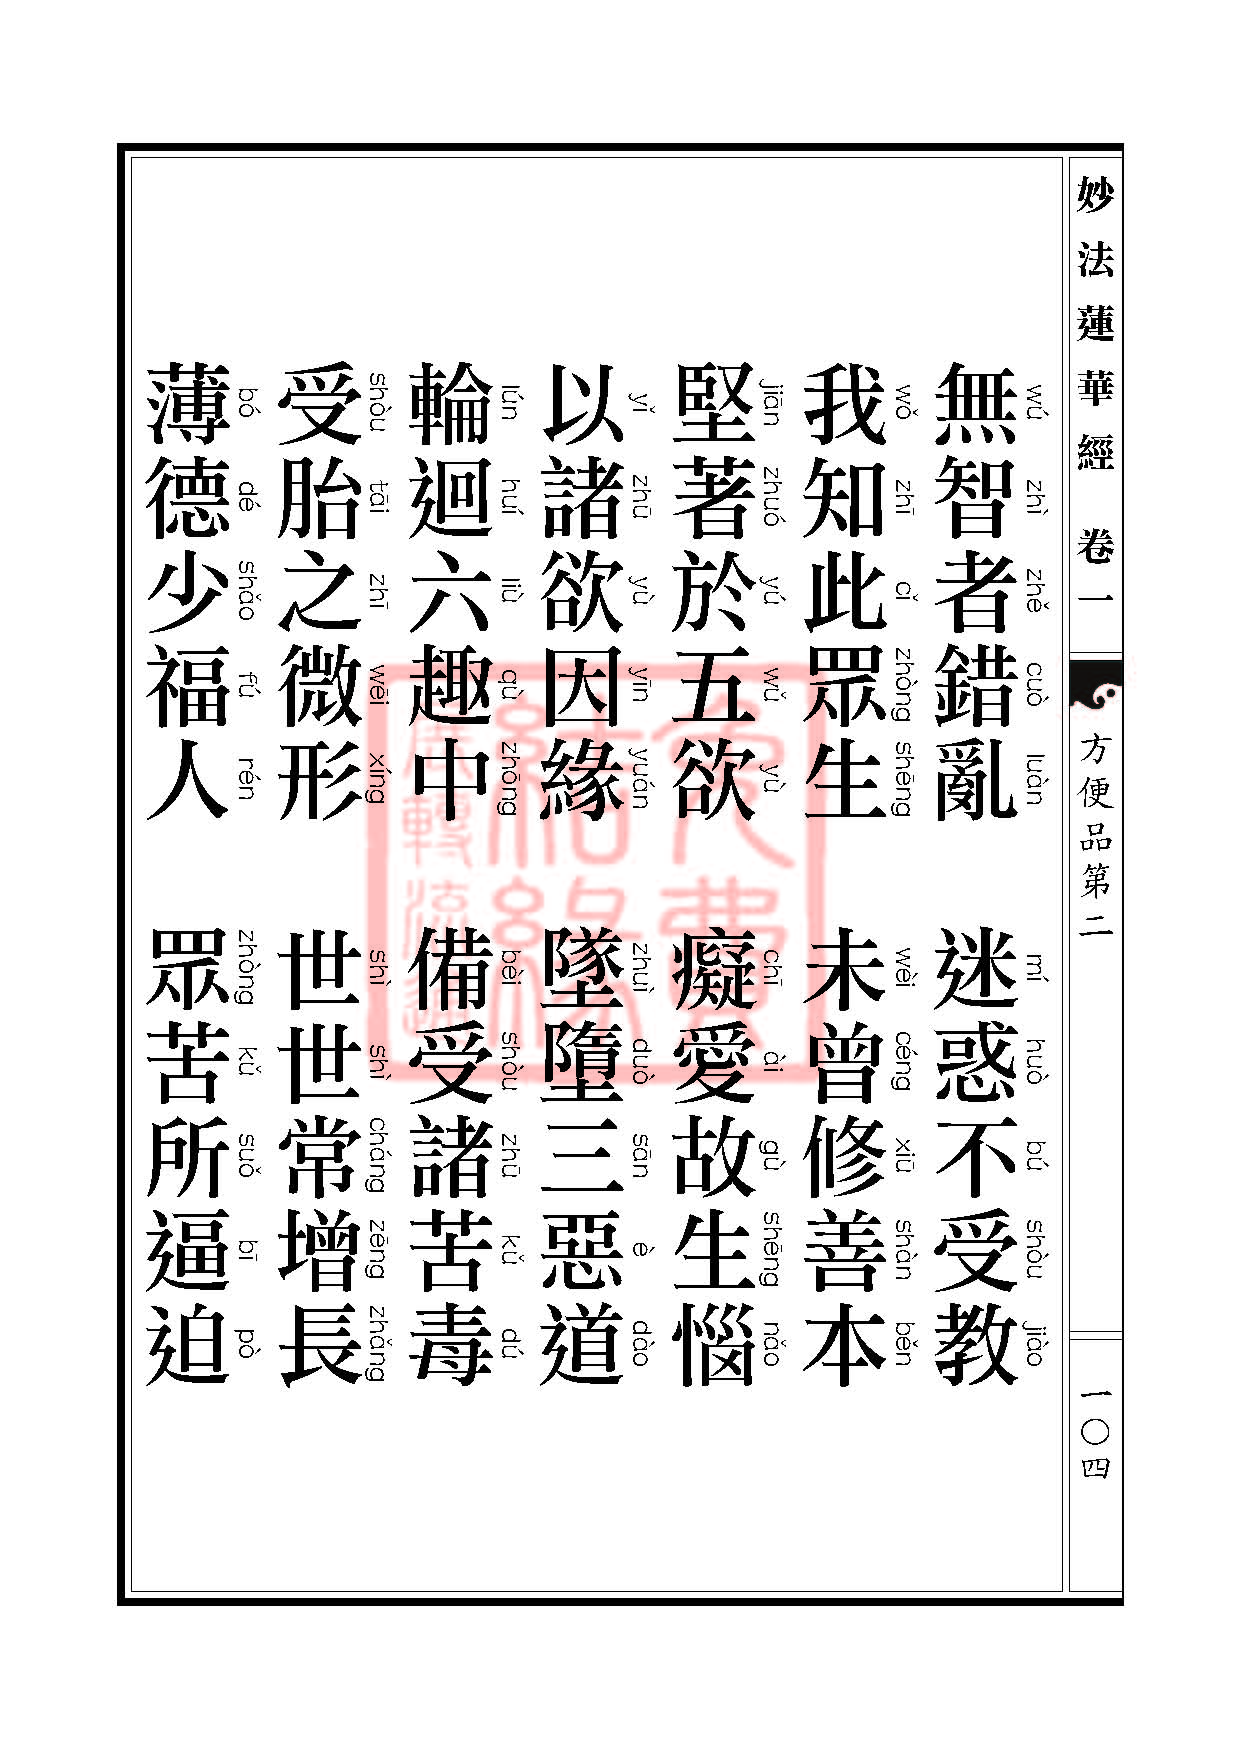 Book_FHJ_HK-A6-PY_Web_ҳ_104.jpg